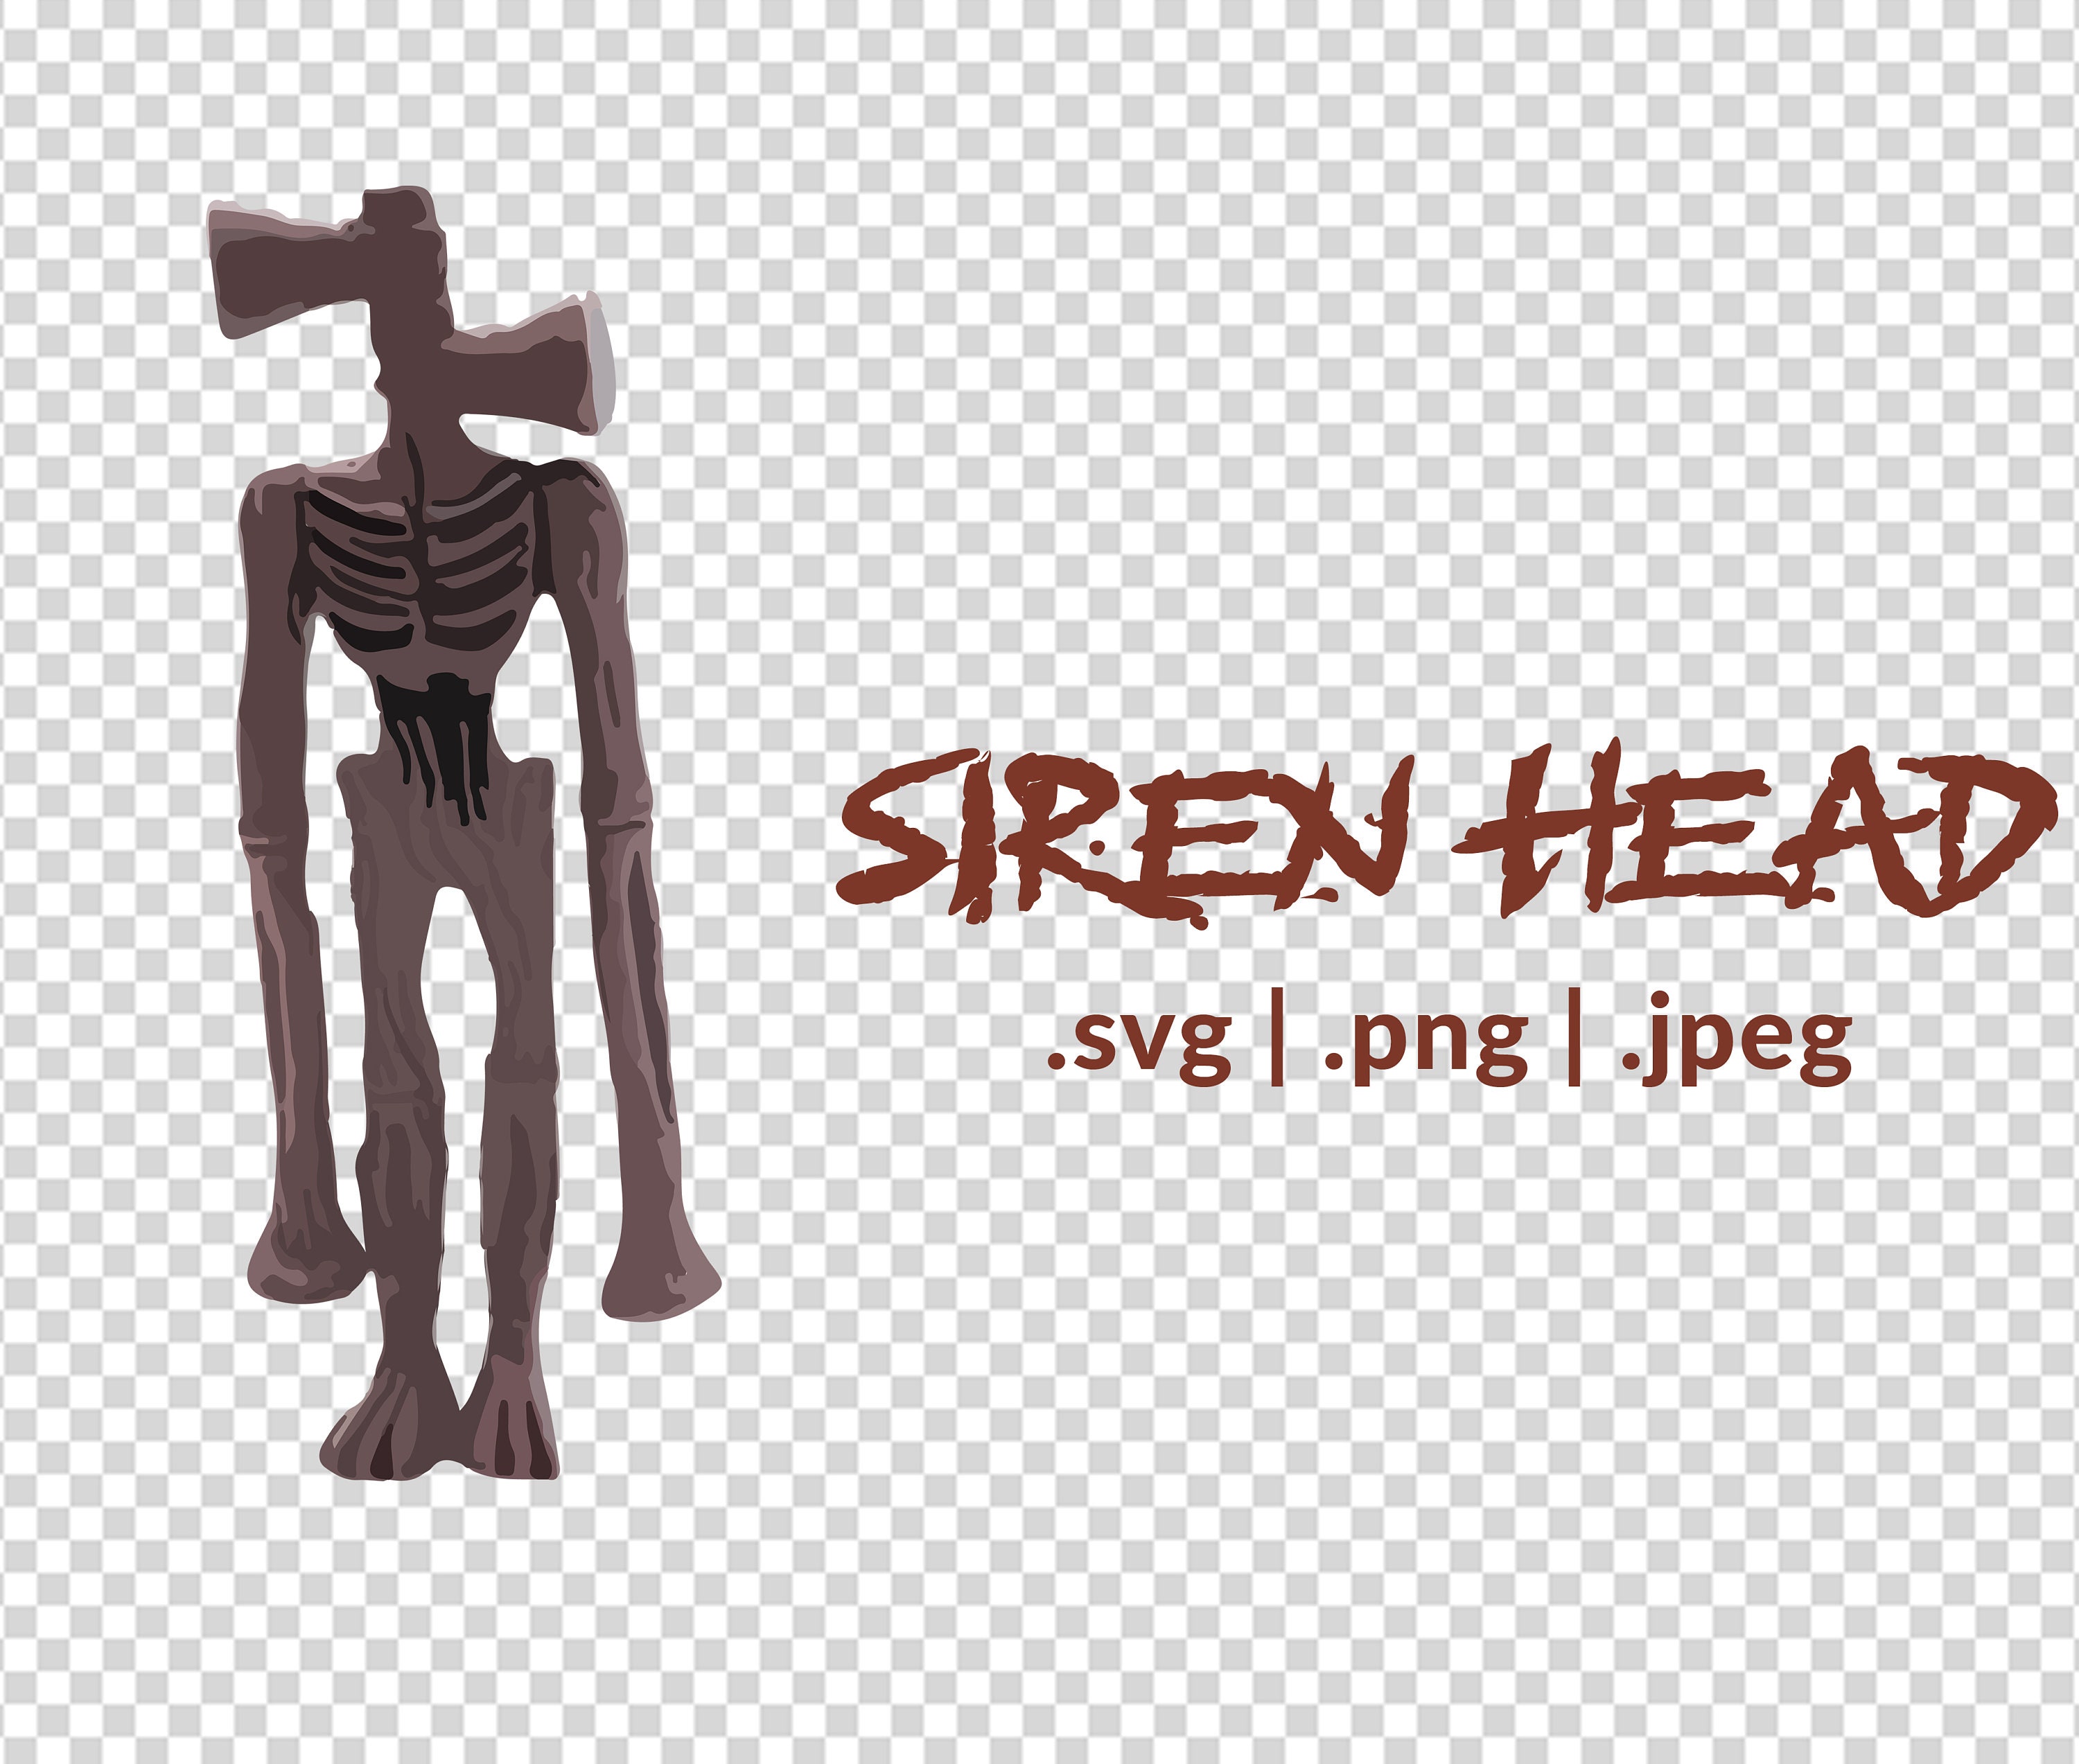 Siren head urban legend mythology creature Vector Image